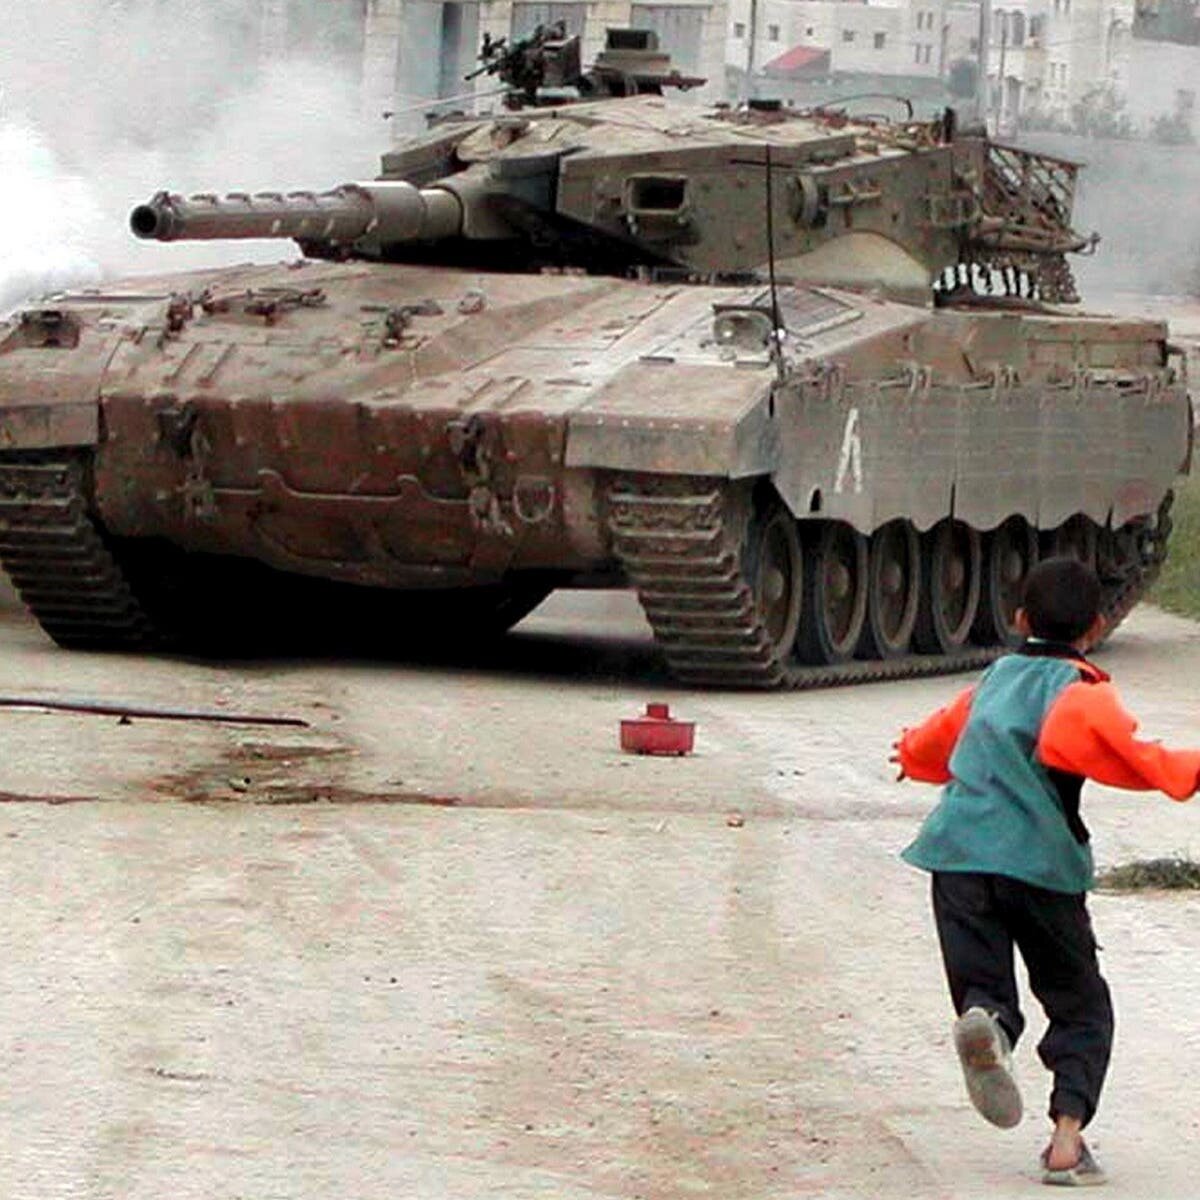 Israeli tanks face off against Palestinian stones (photo courtesy Haaretz).